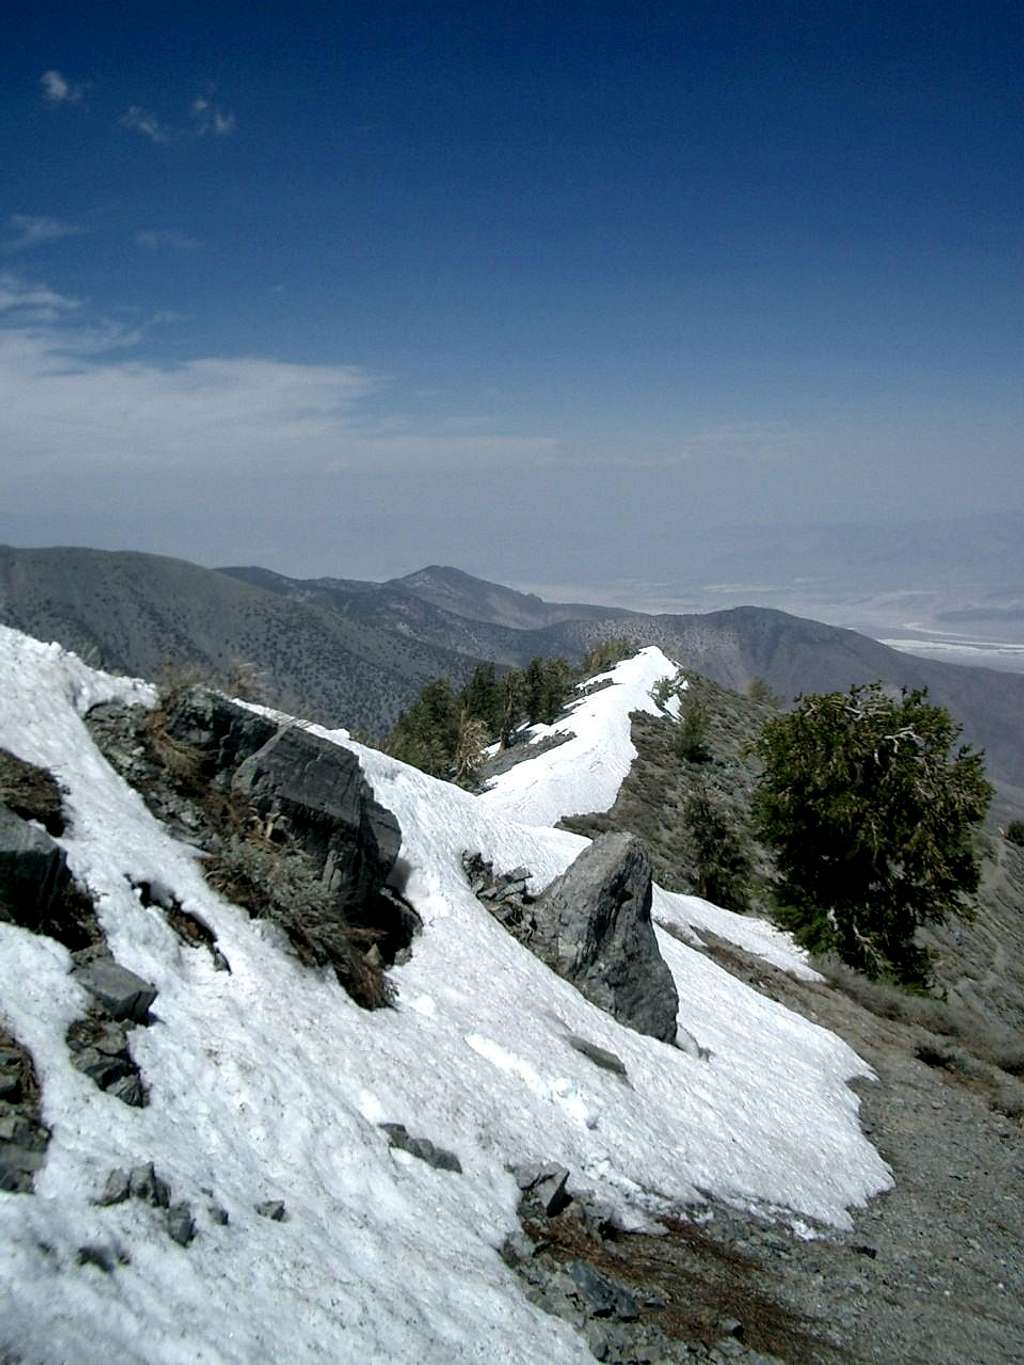 Telescope Peak - Snowy ridge